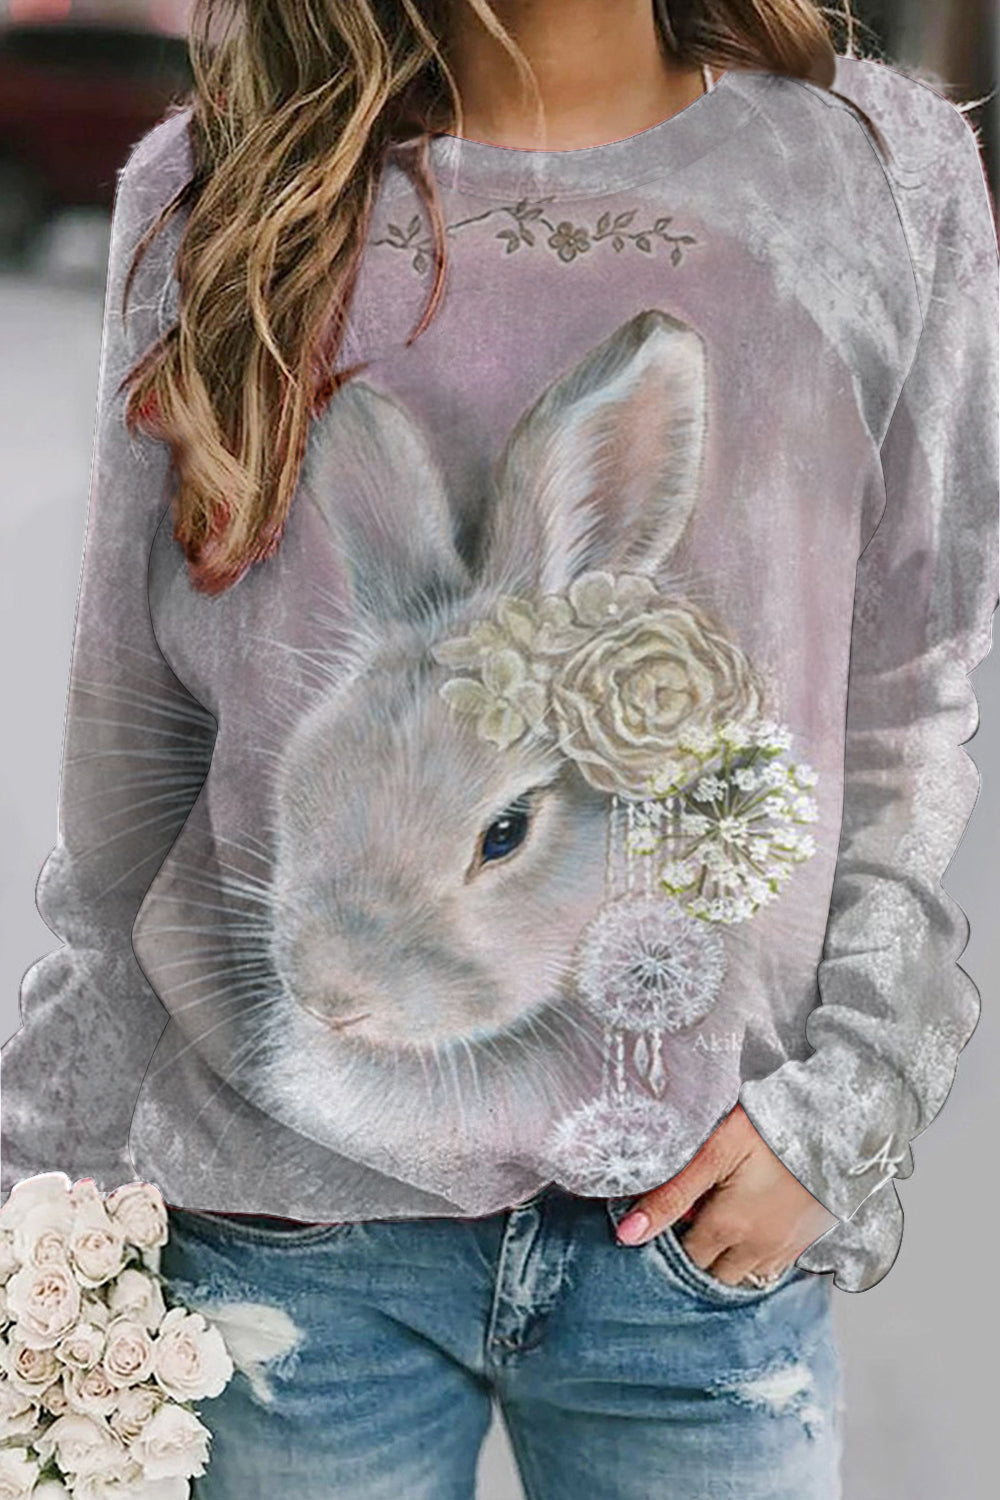 3D Vintage Pink Easter Bunny With Wreath Earring Printed Sweatshirt